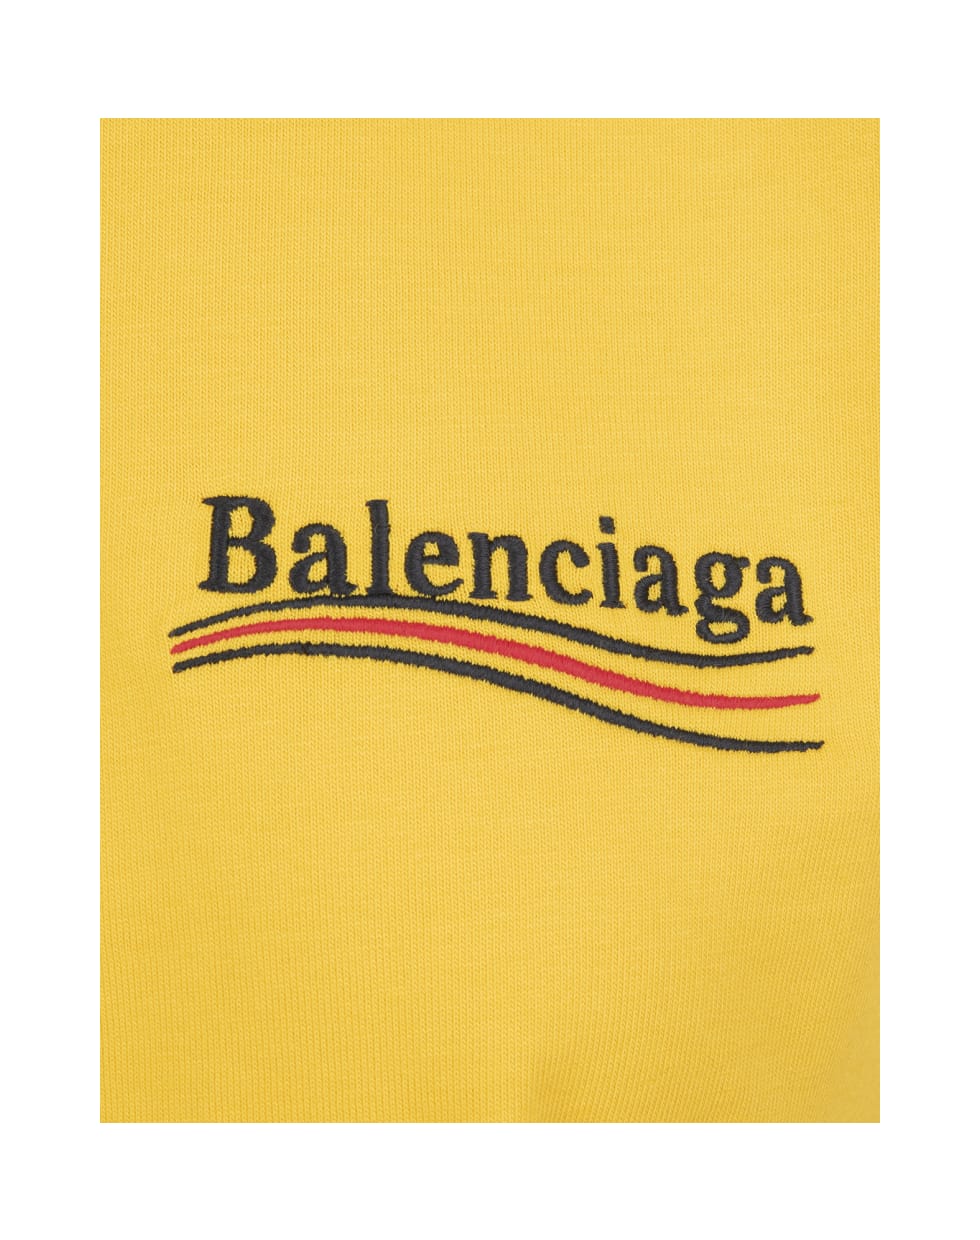 Balenciaga Woman Yellow Slim Fit Political Campaign T-shirt - Giallo